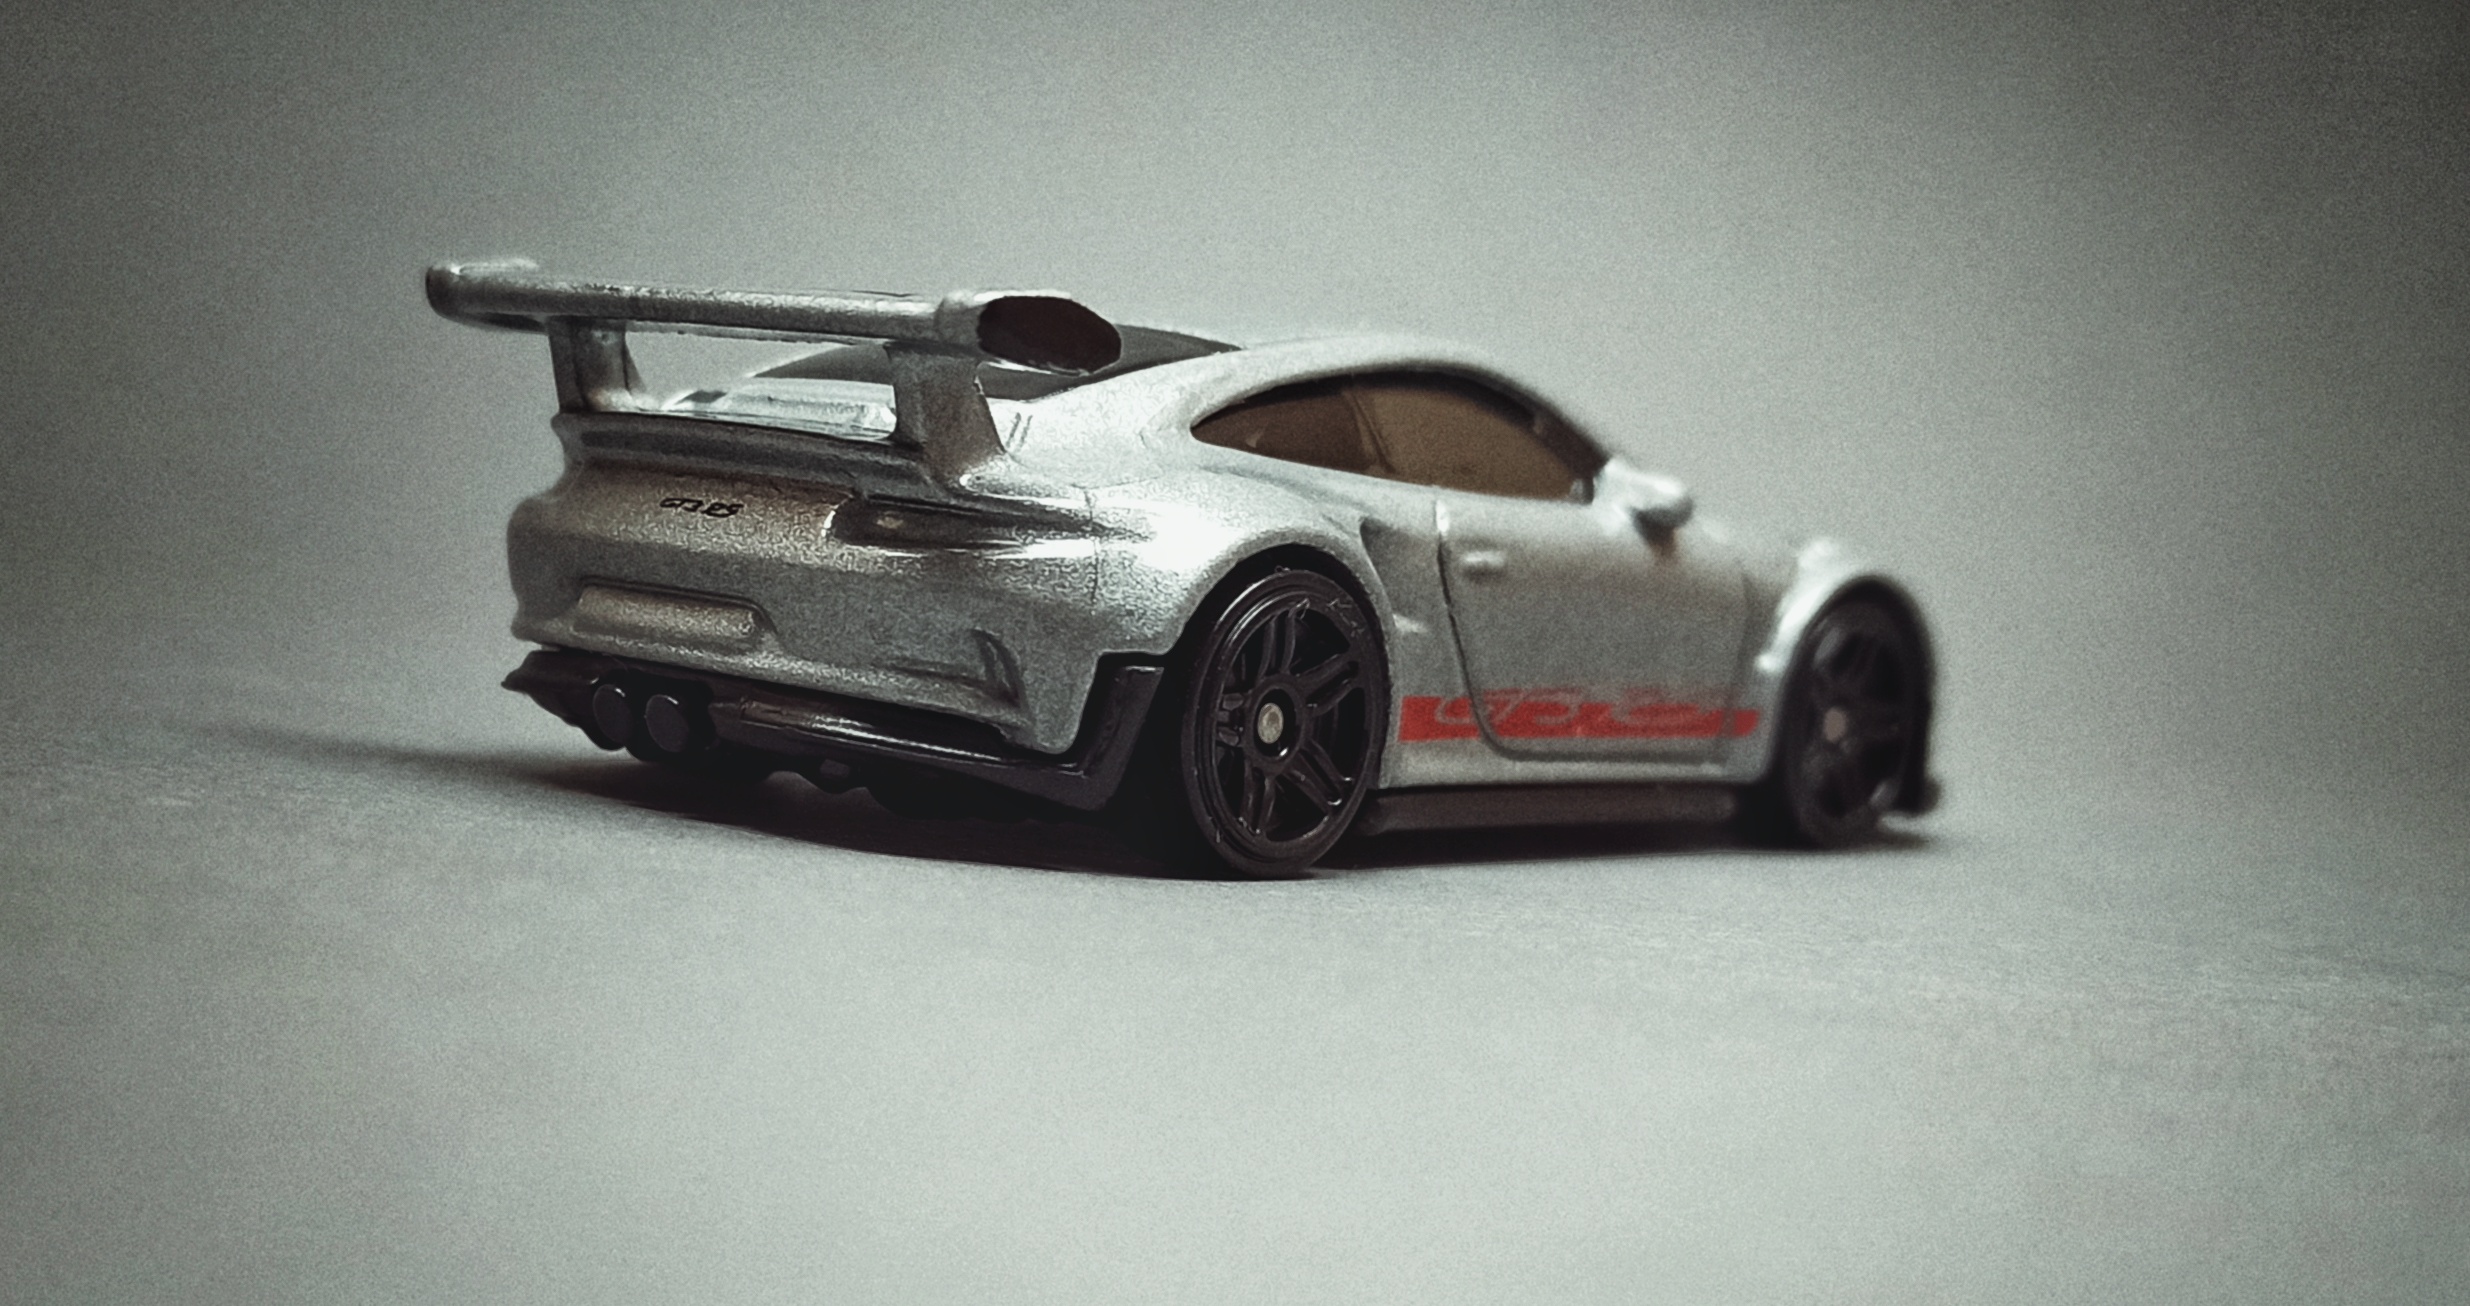 Hot Wheels Porsche 911 GT3 RS (HDH51) 2022 European Themed Multipack (6-Pack) metalflake silver